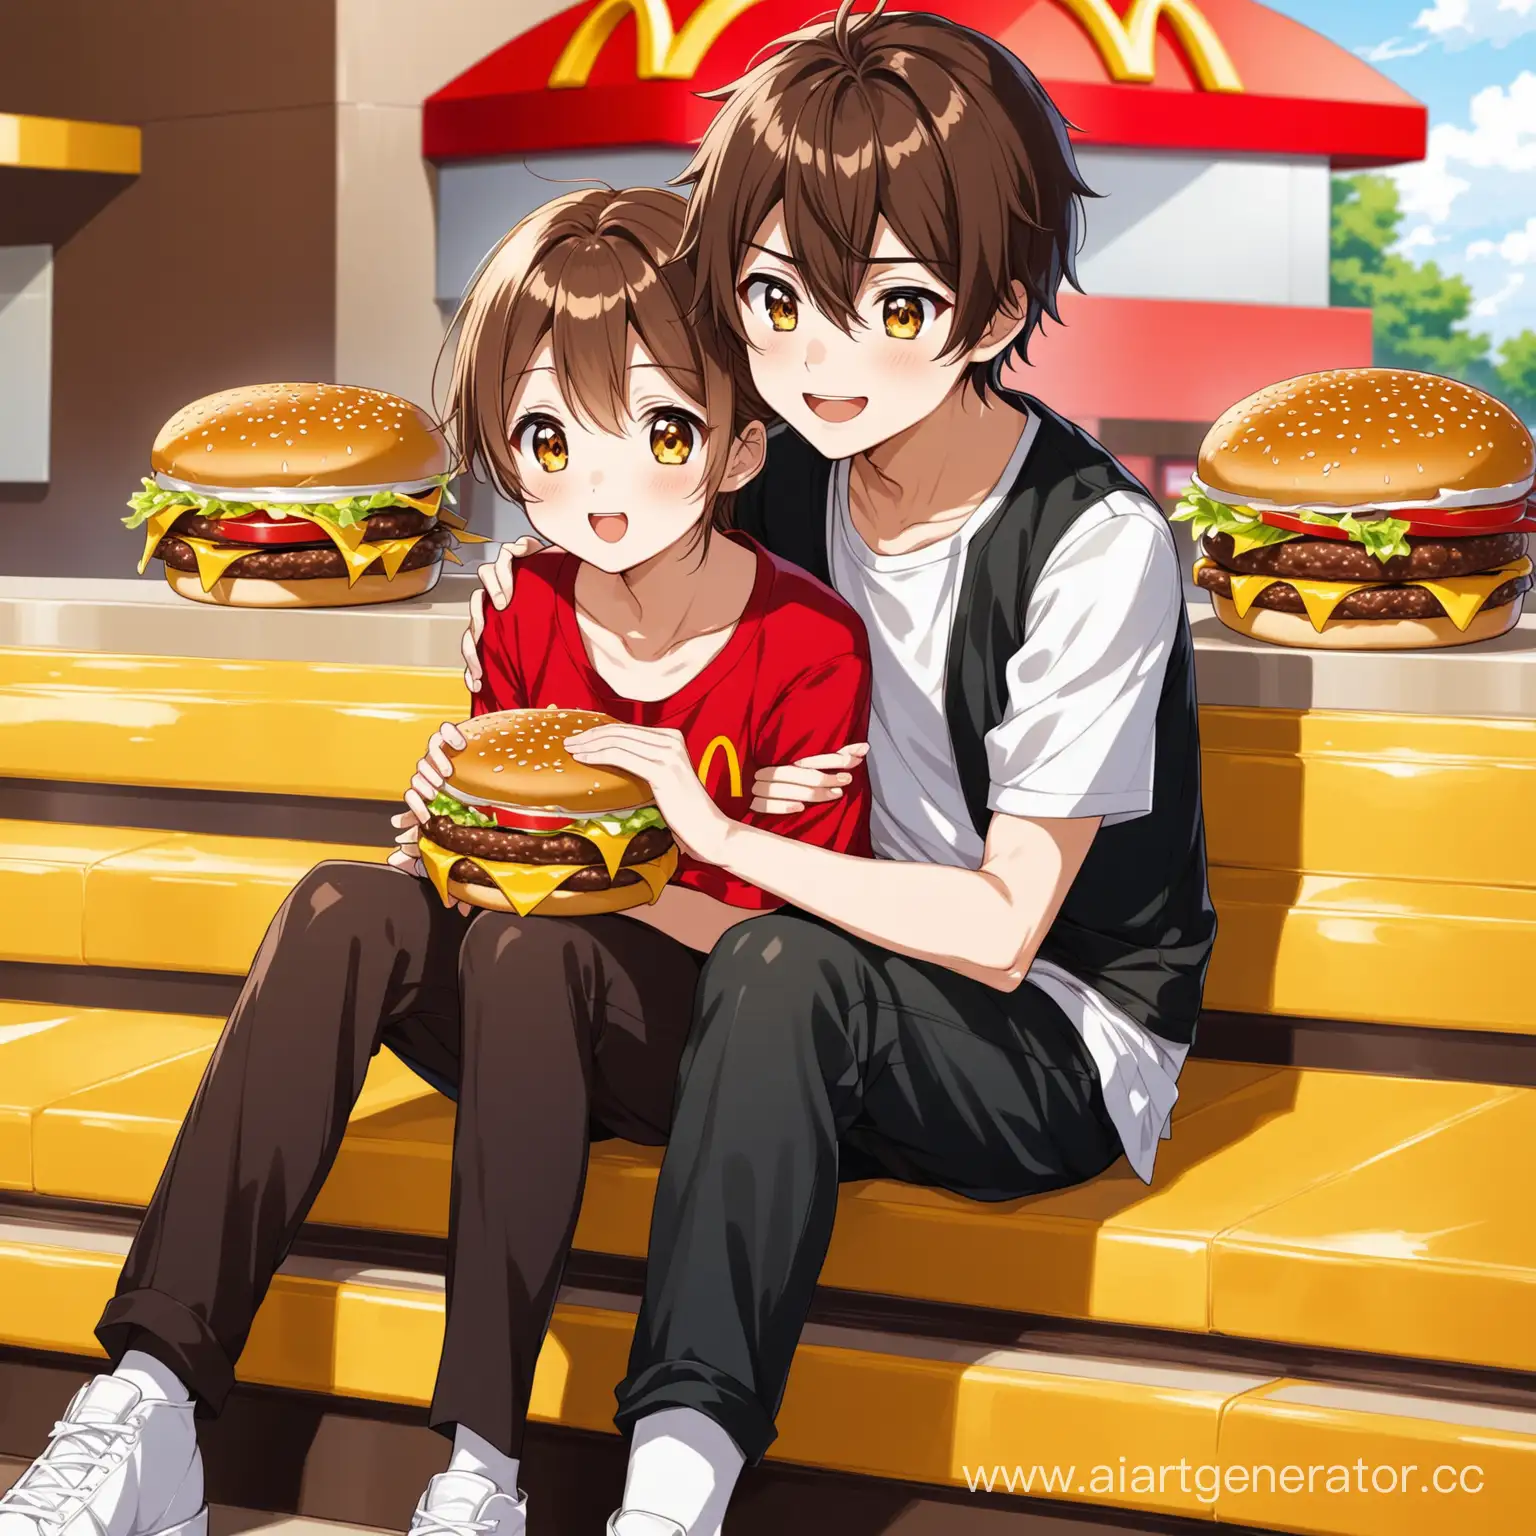 Anime-Boy-and-Girl-Enjoying-McDonalds-Burger-with-Brown-Hair